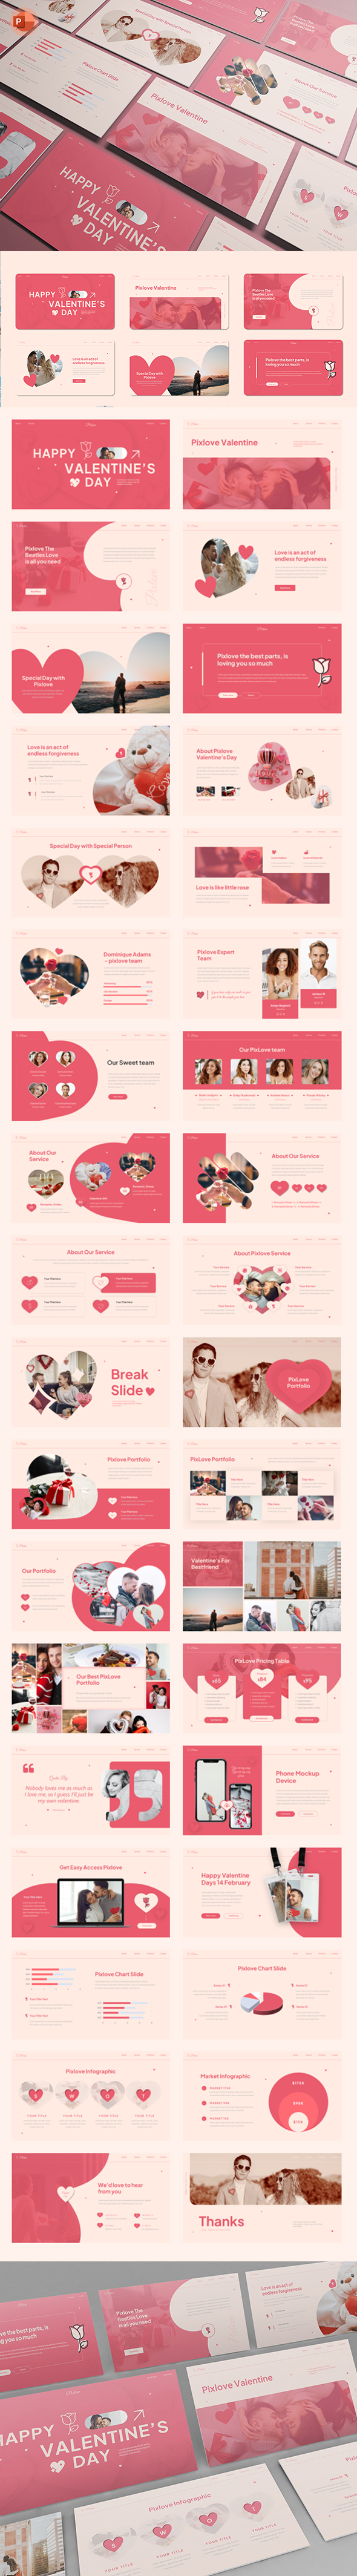 [DOWNLOAD]PixLove - Love and Valentine Themes Presentation Template